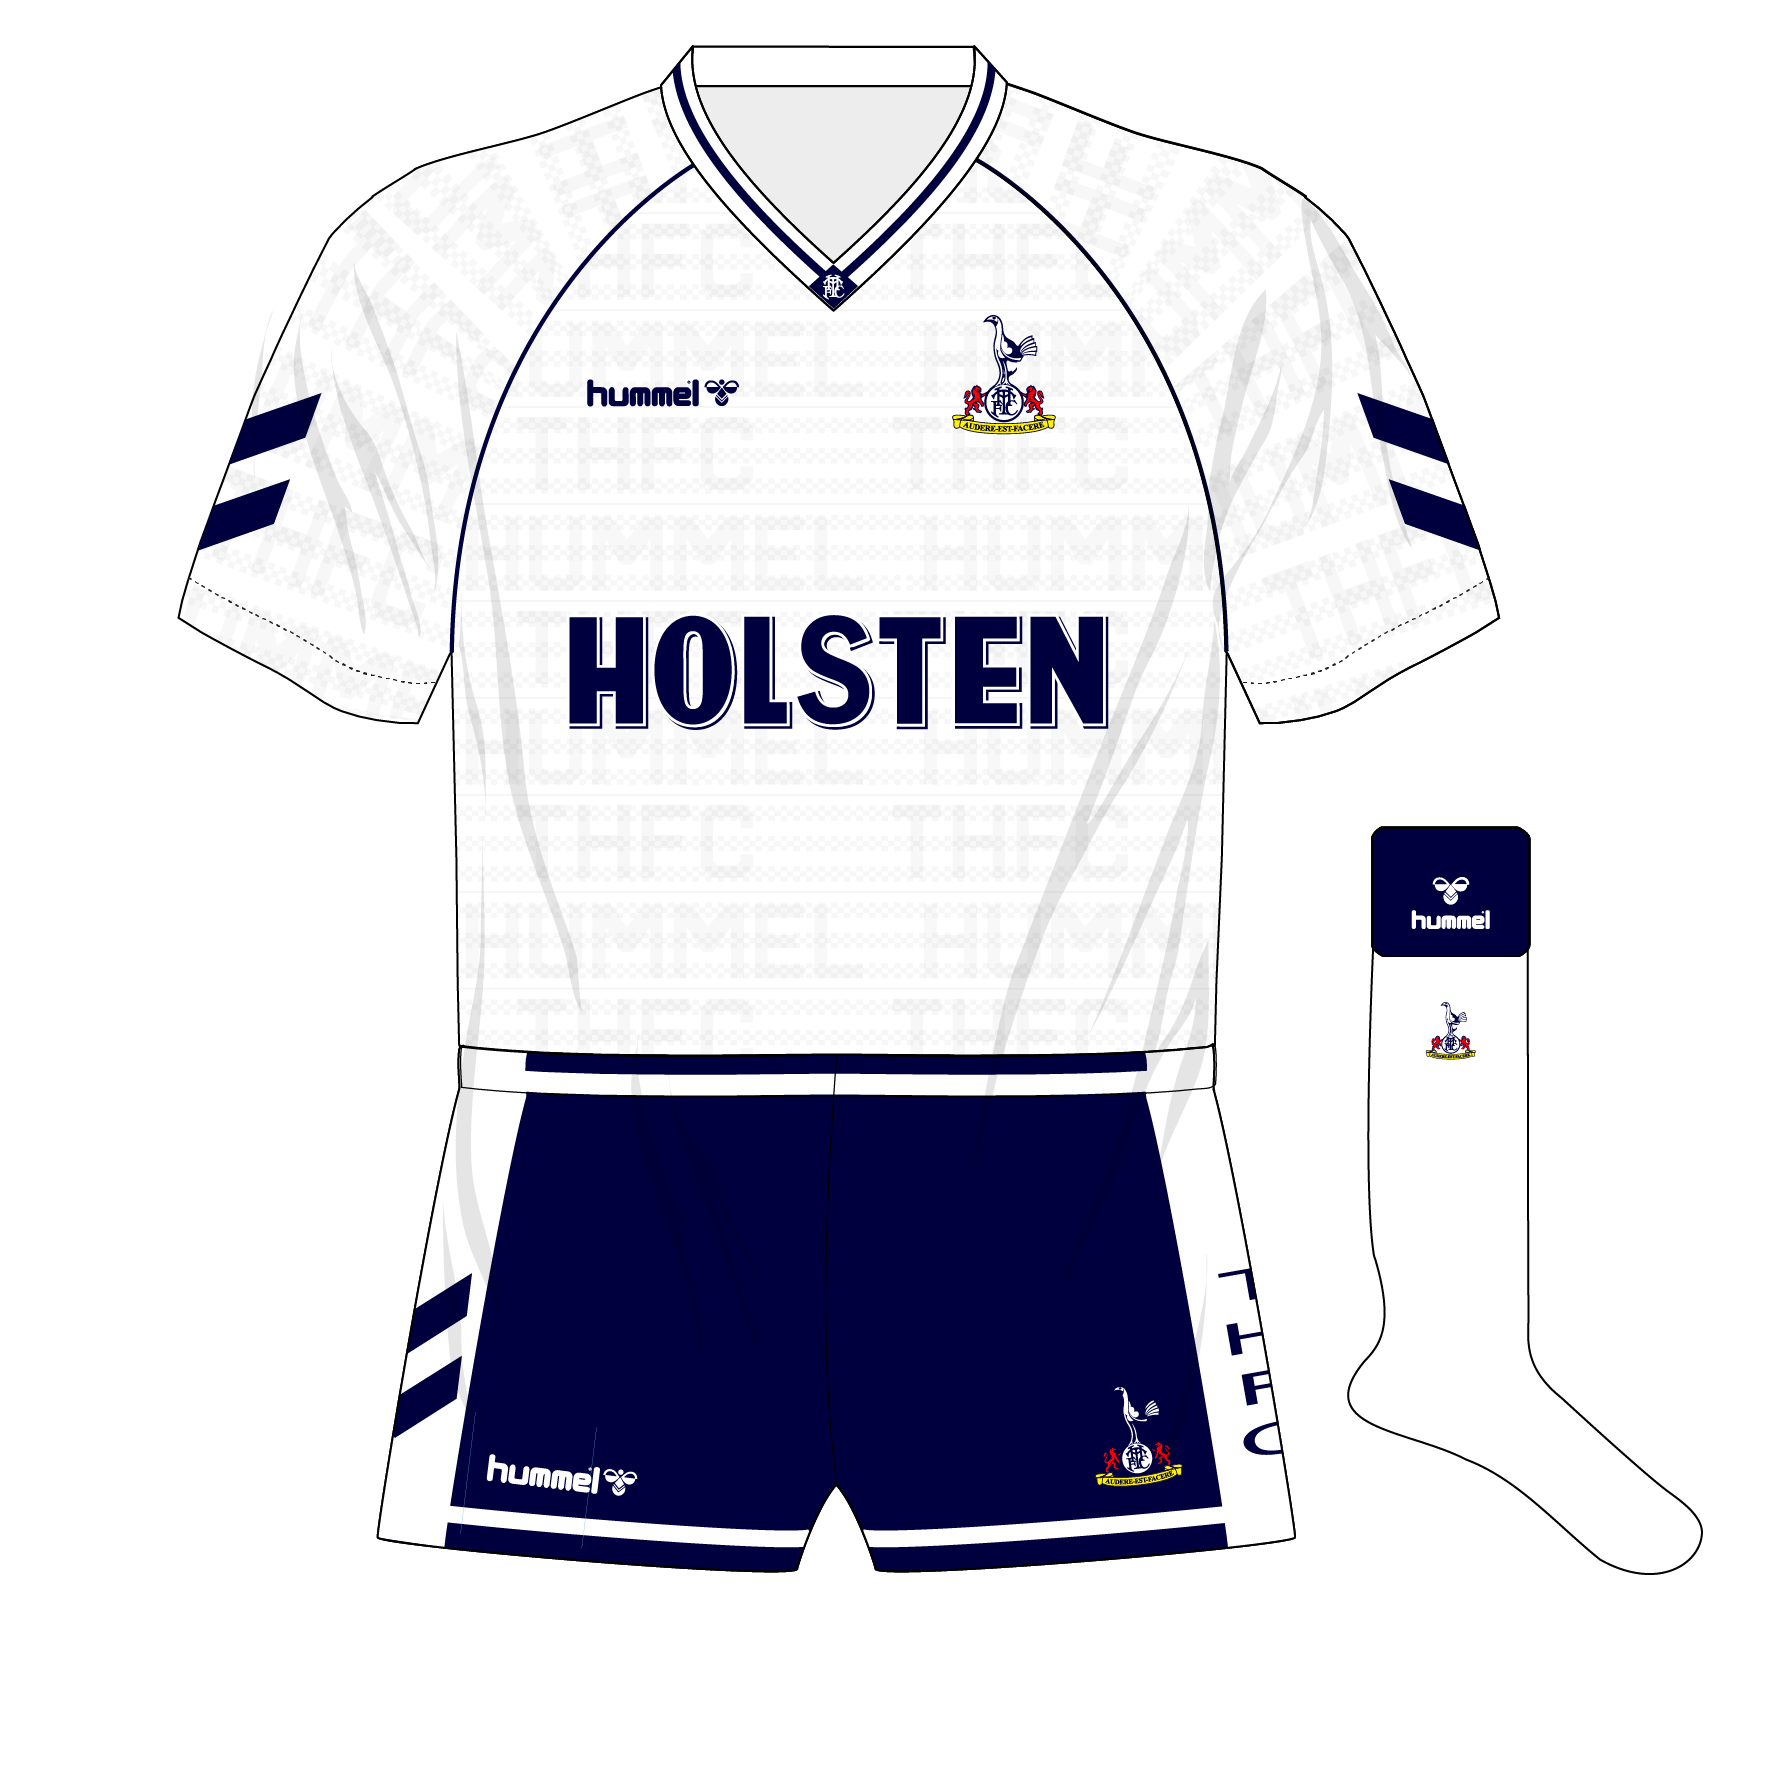 Tottenham Hotspur Home football shirt 1987 - 1989. Sponsored by Holsten